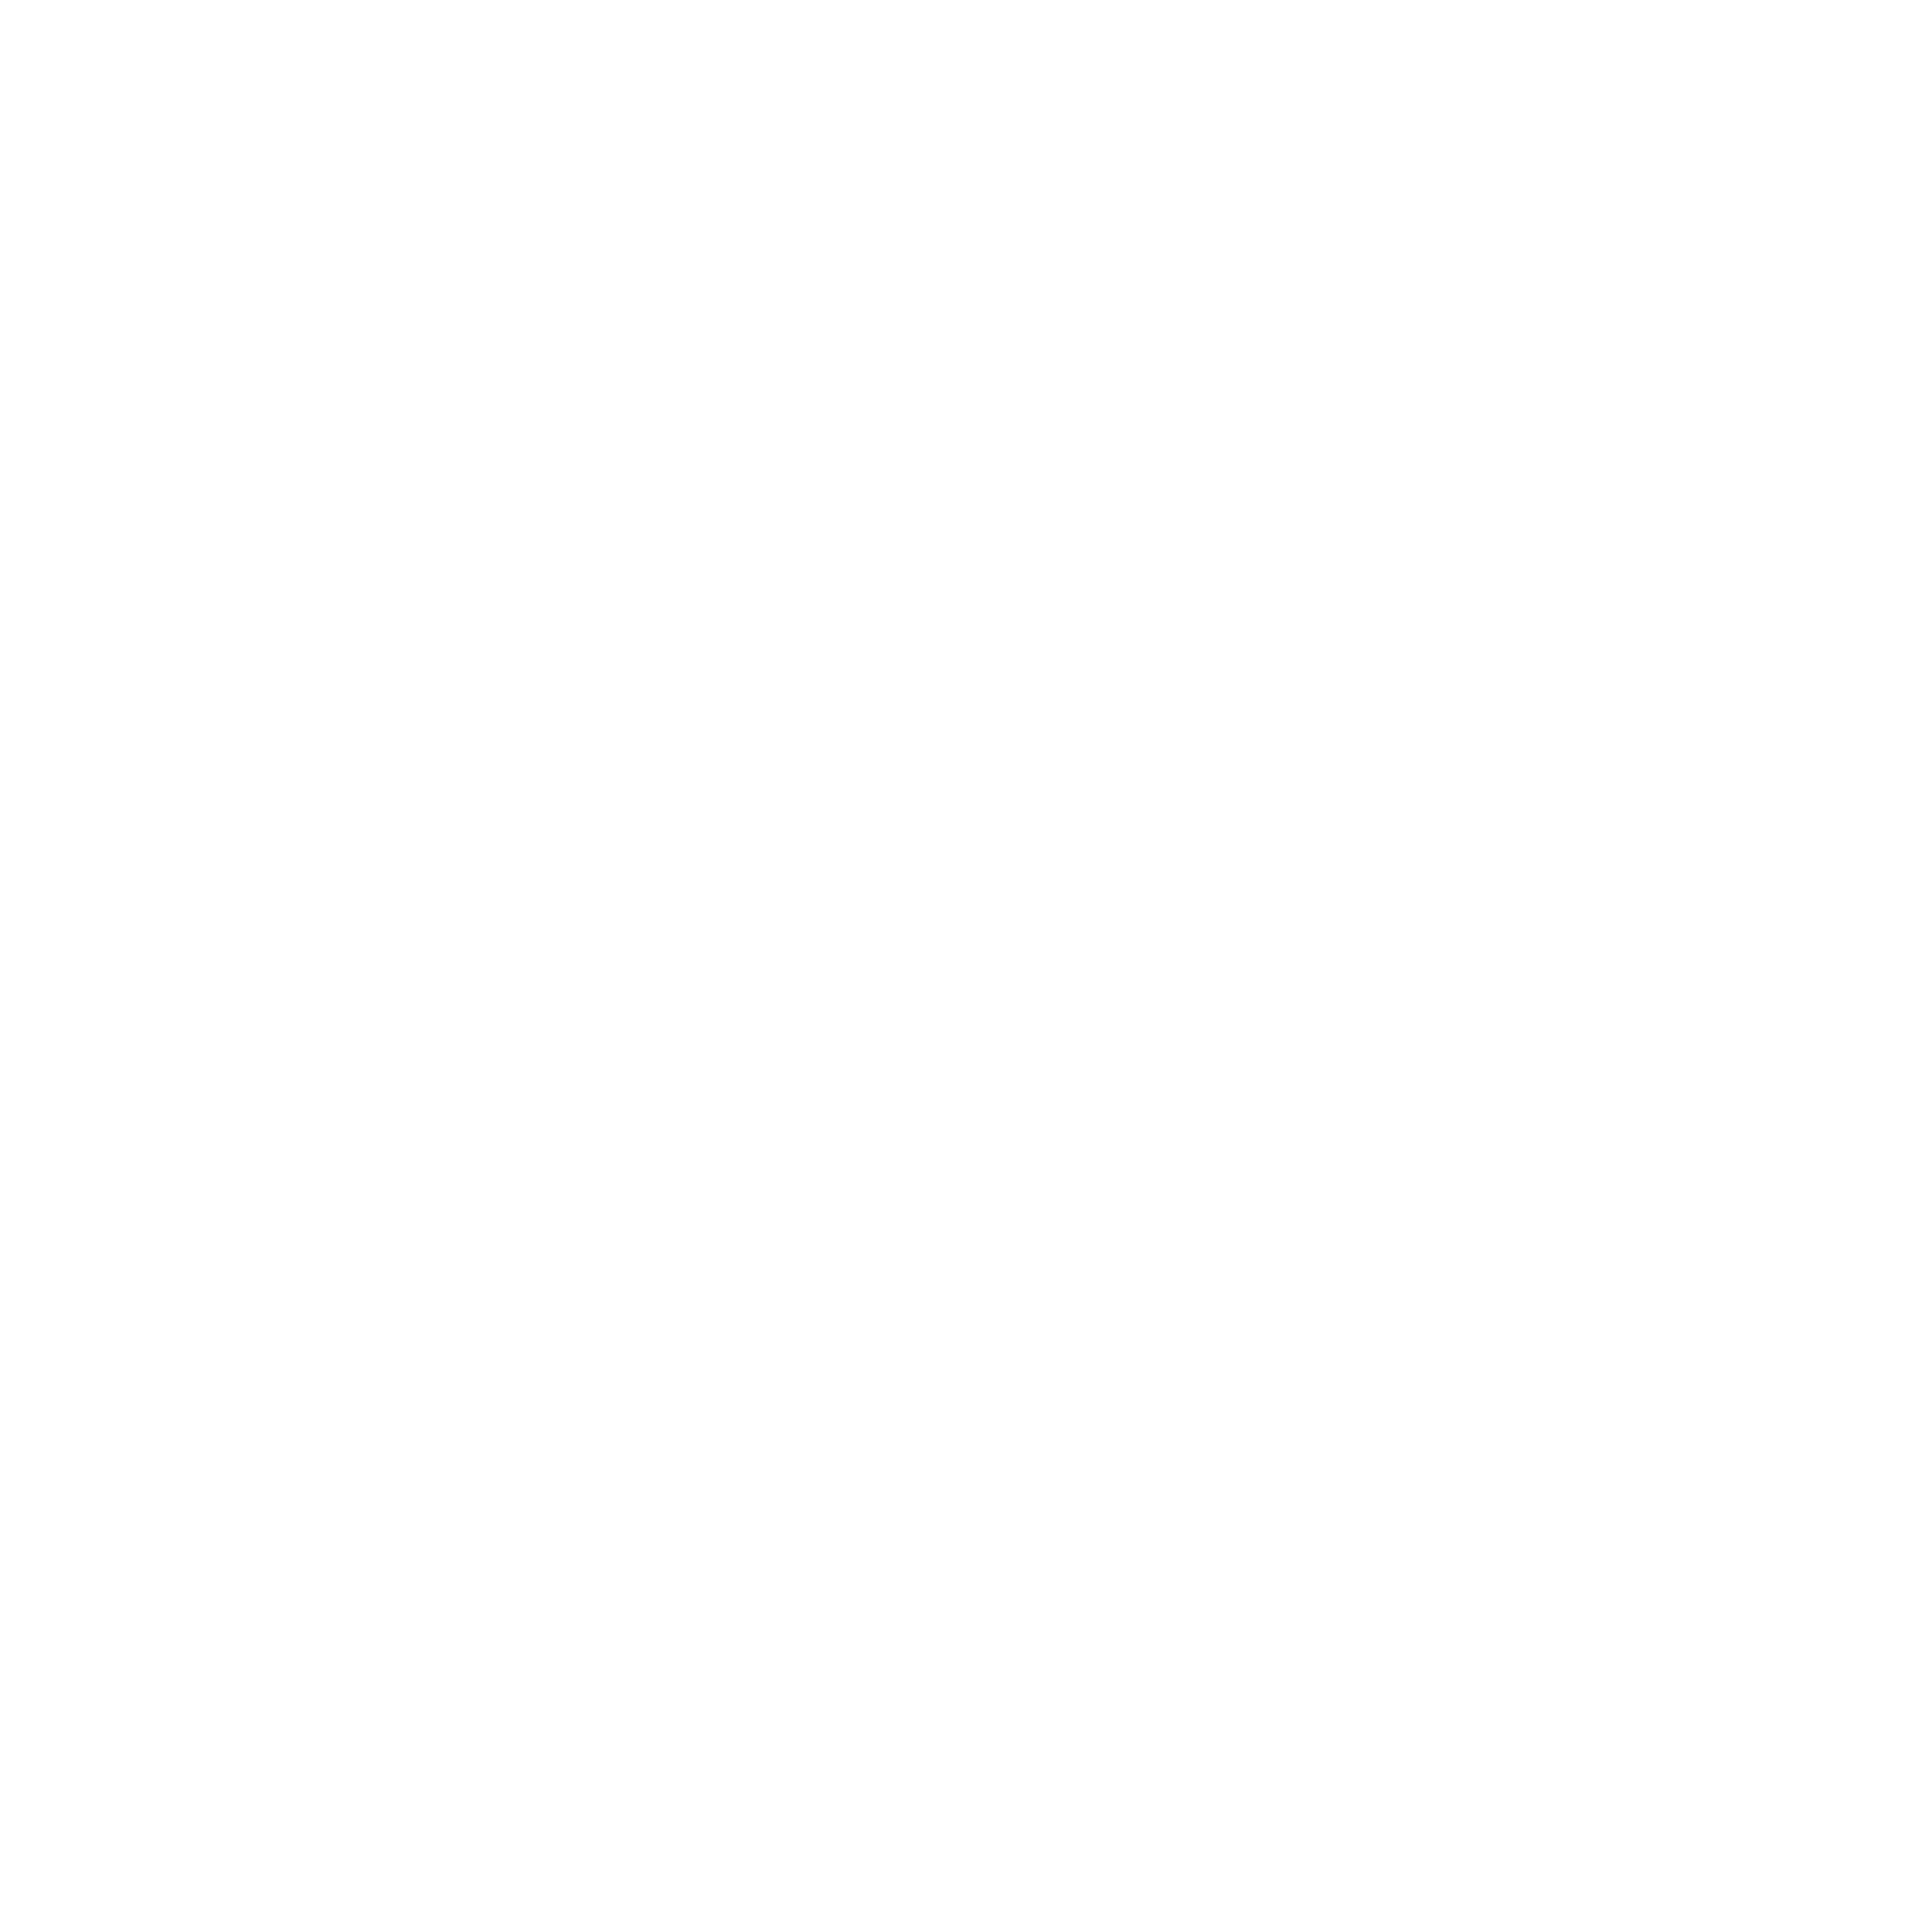 The Leo Constellation